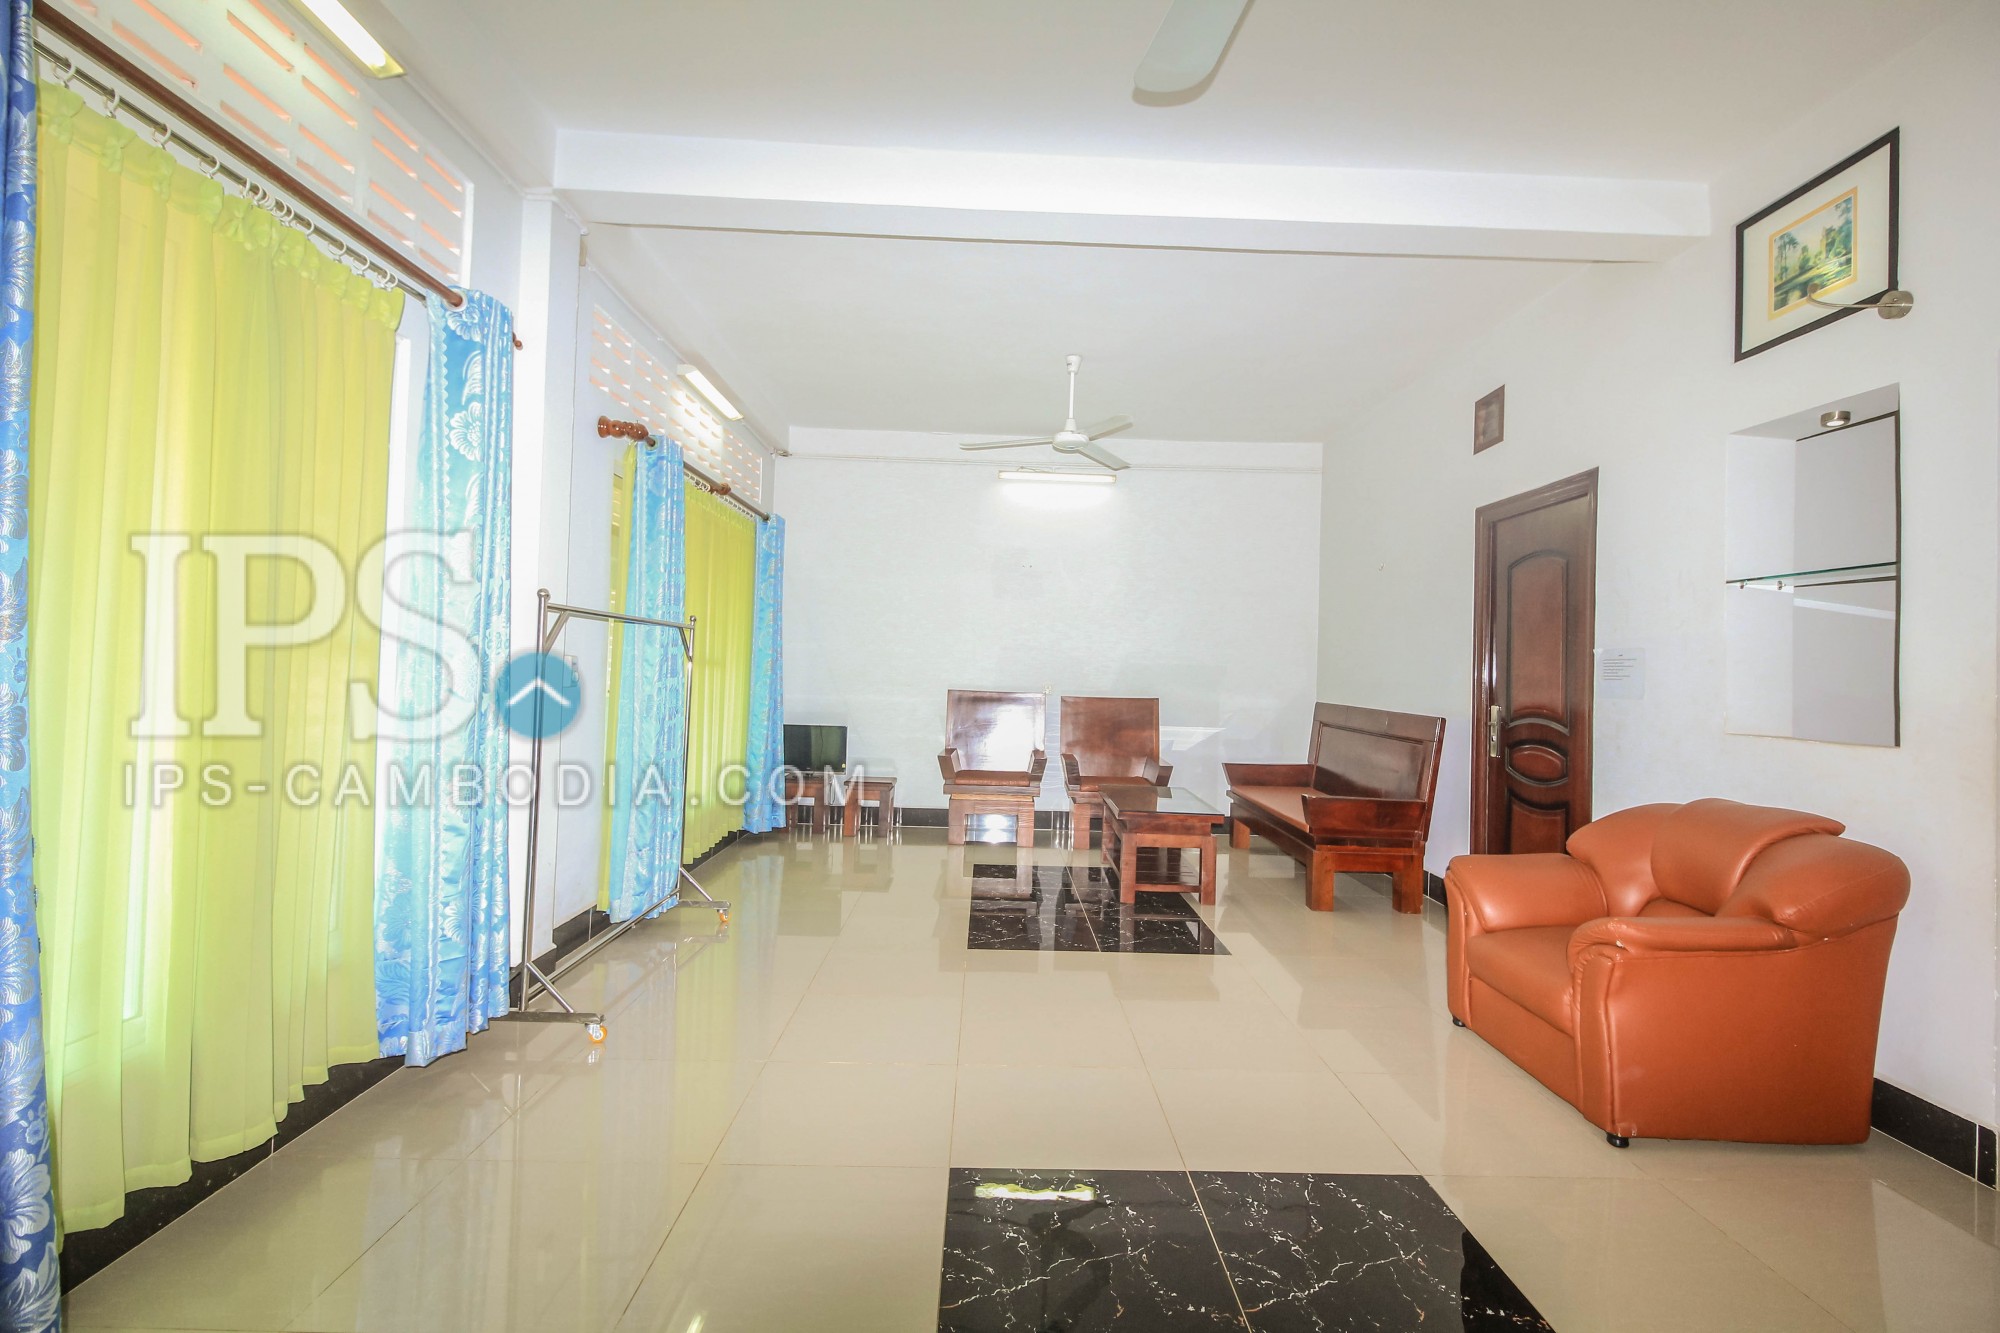 2 Bedroom Serviced Apartment For Rent - Slor Kram thumbnail